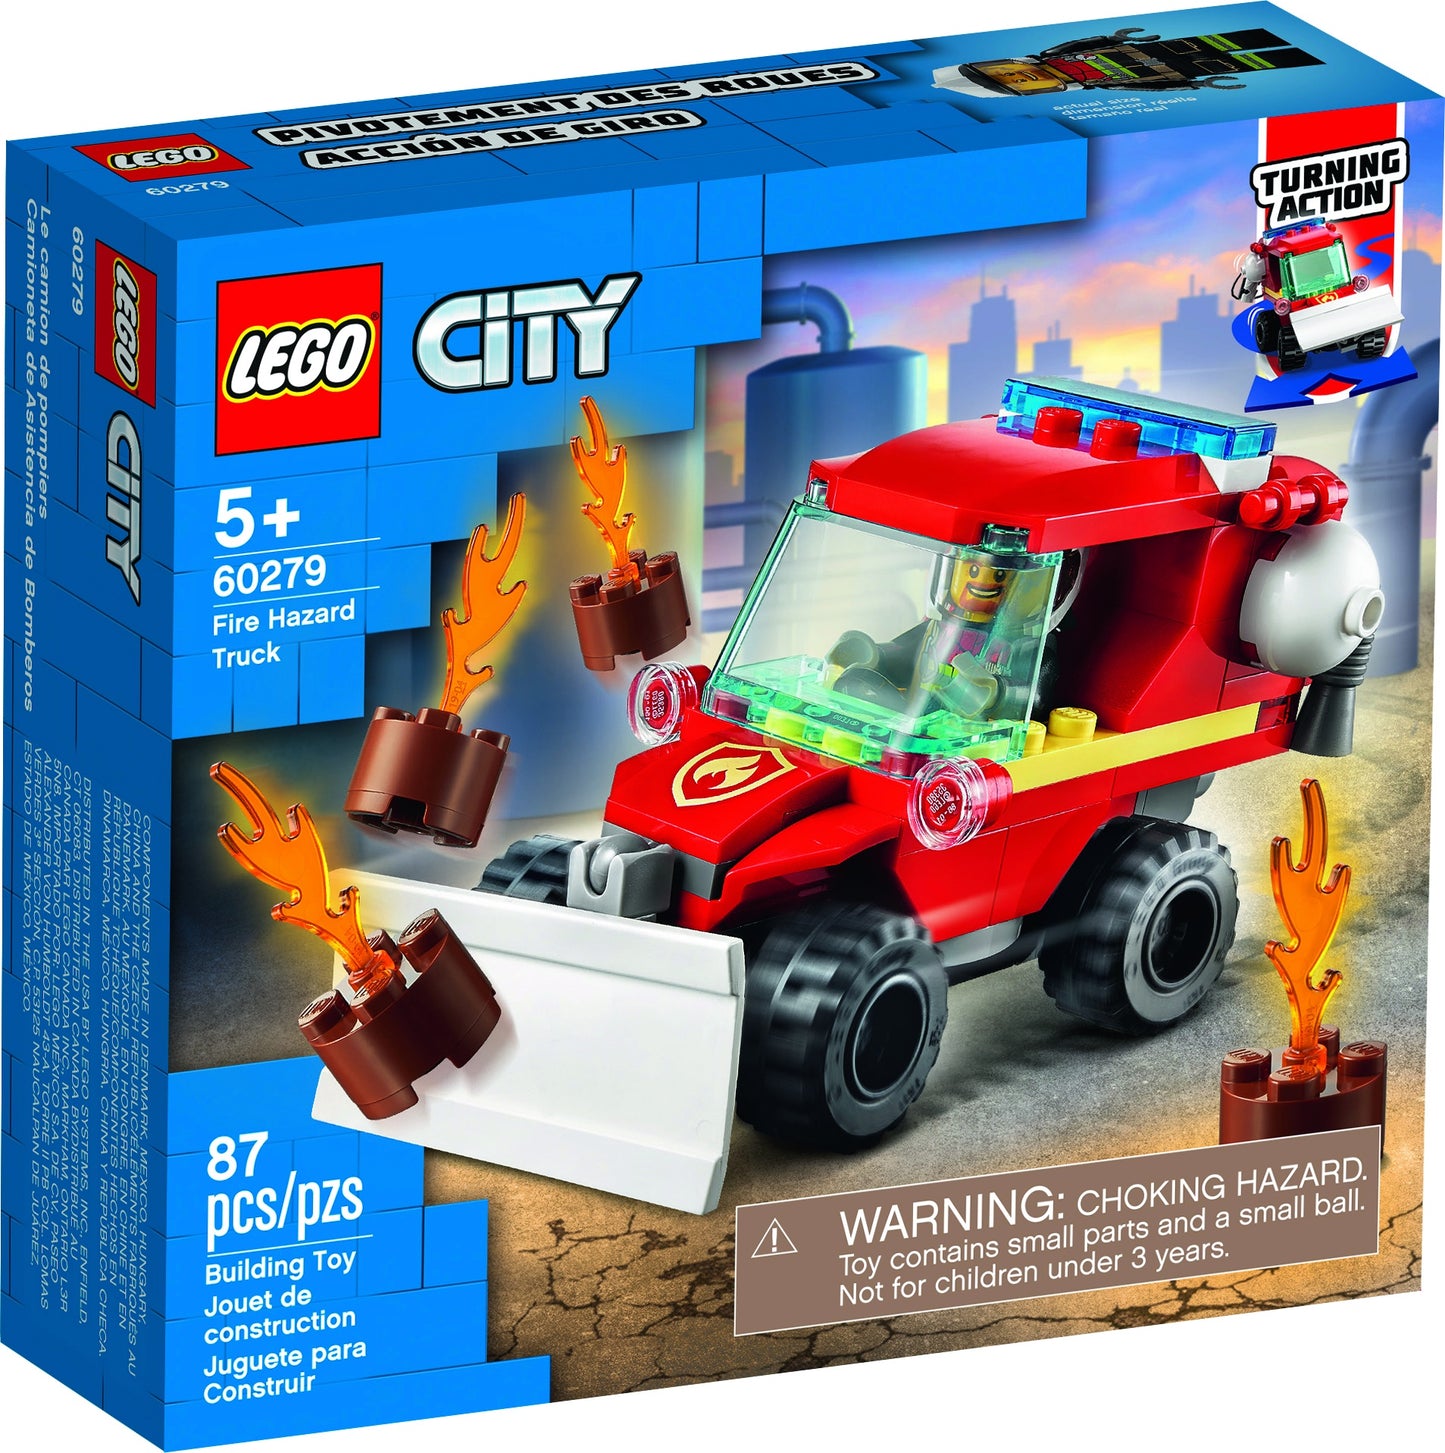 Fire Hazzard Truck Lego